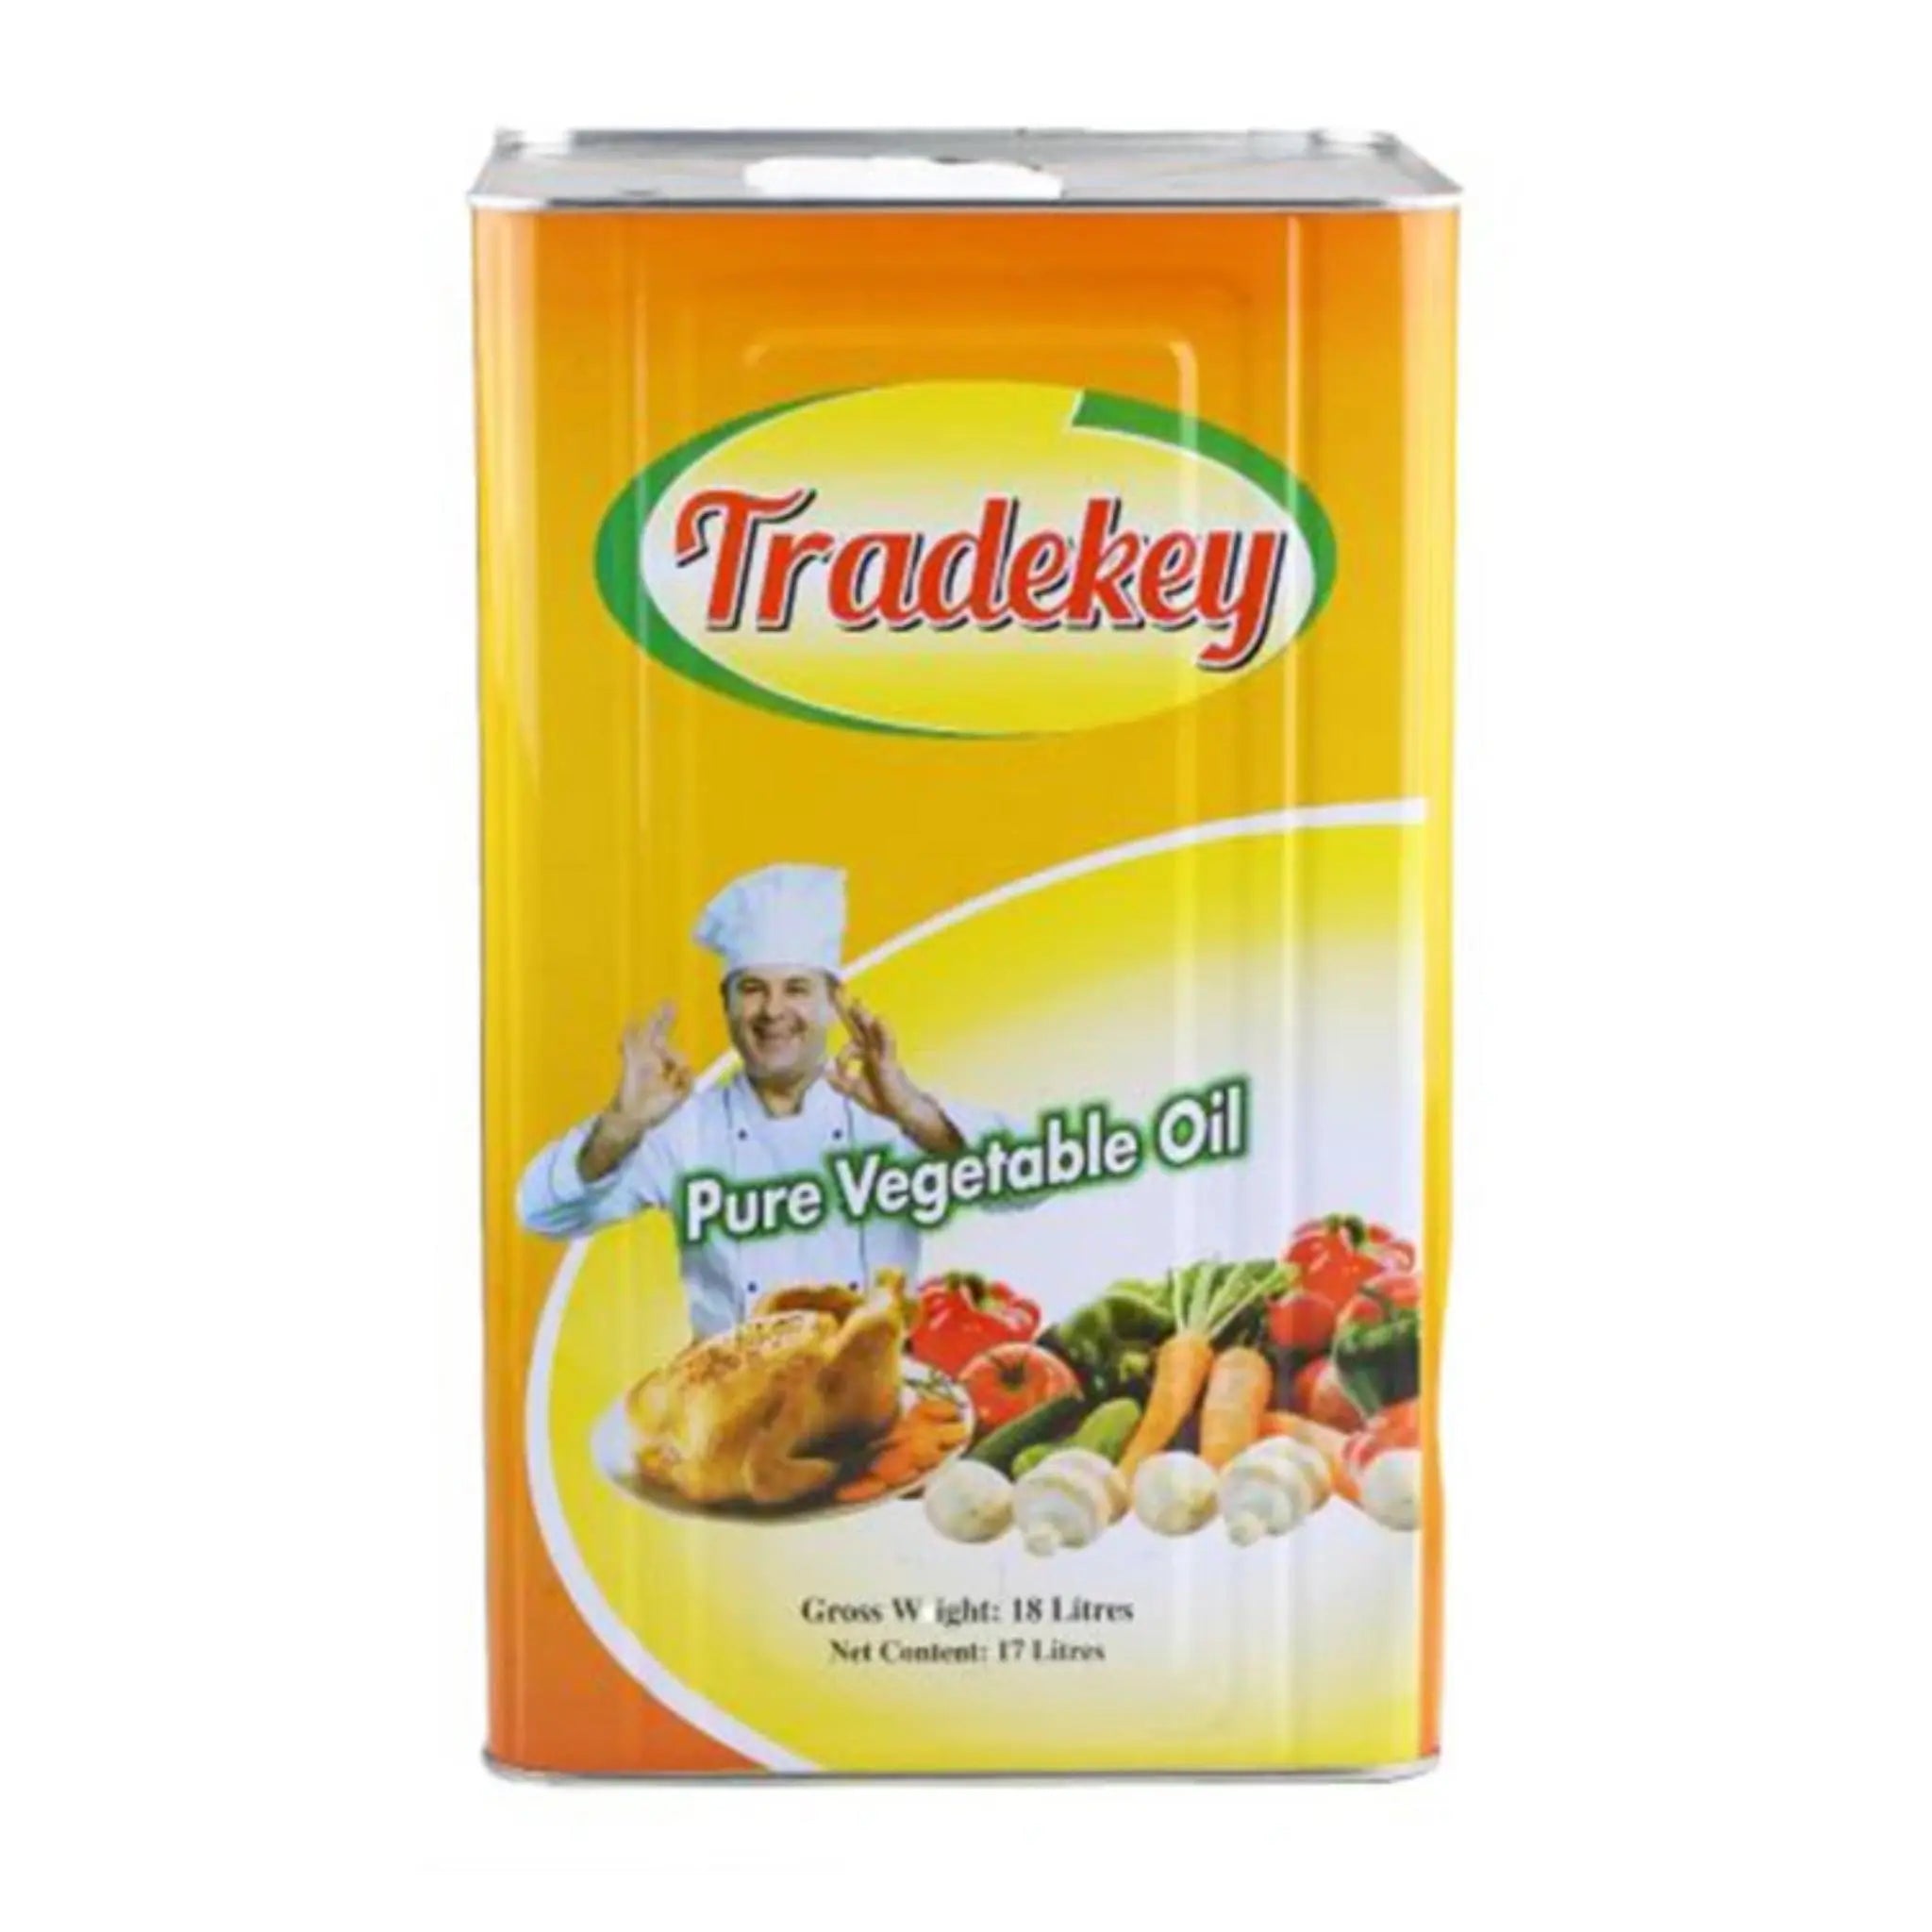 Tradekey Pure Vegetable Oil 17L Marino.AE